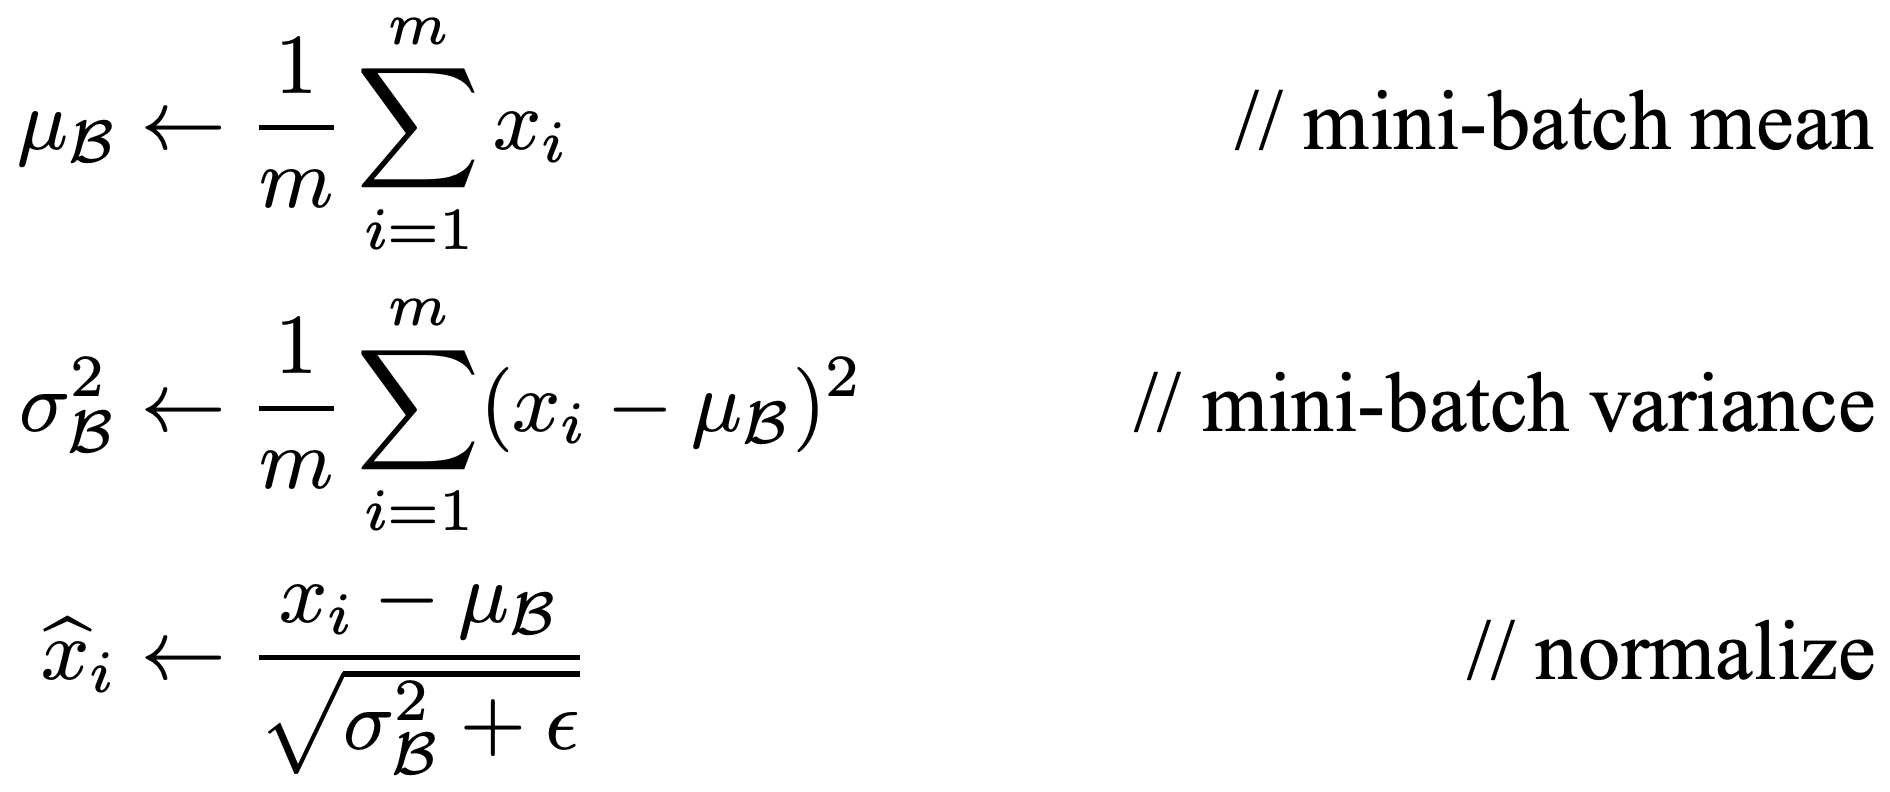 forward propagation equations